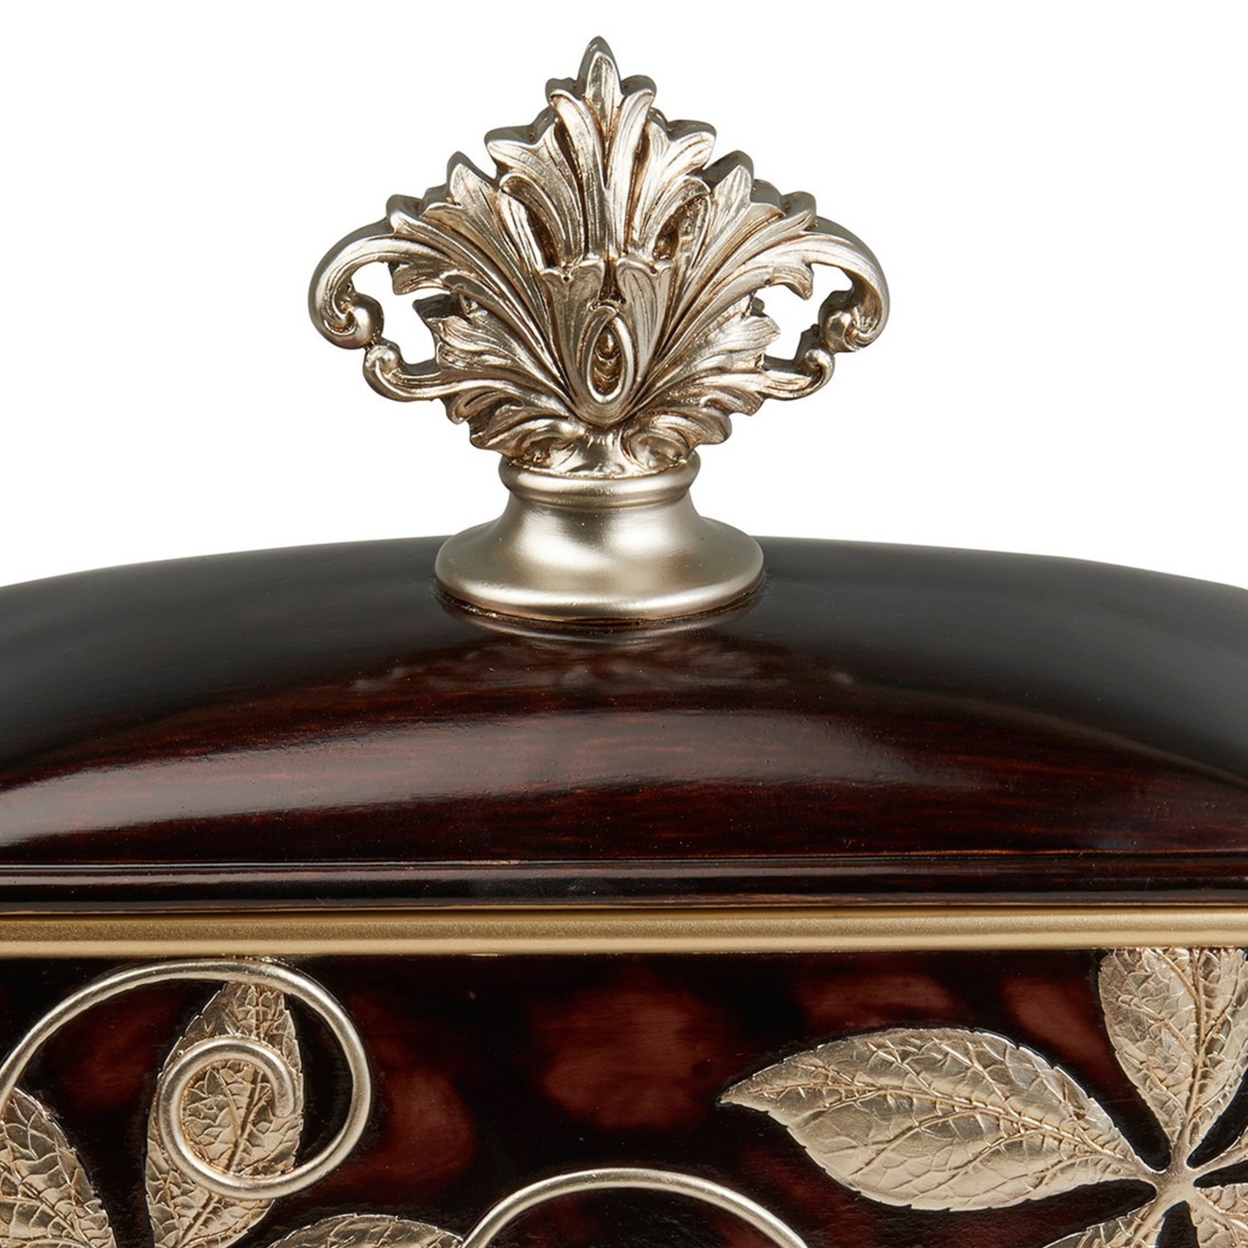 Jewelry Box With Foliage Pattern And Lid, Brown- Saltoro Sherpi